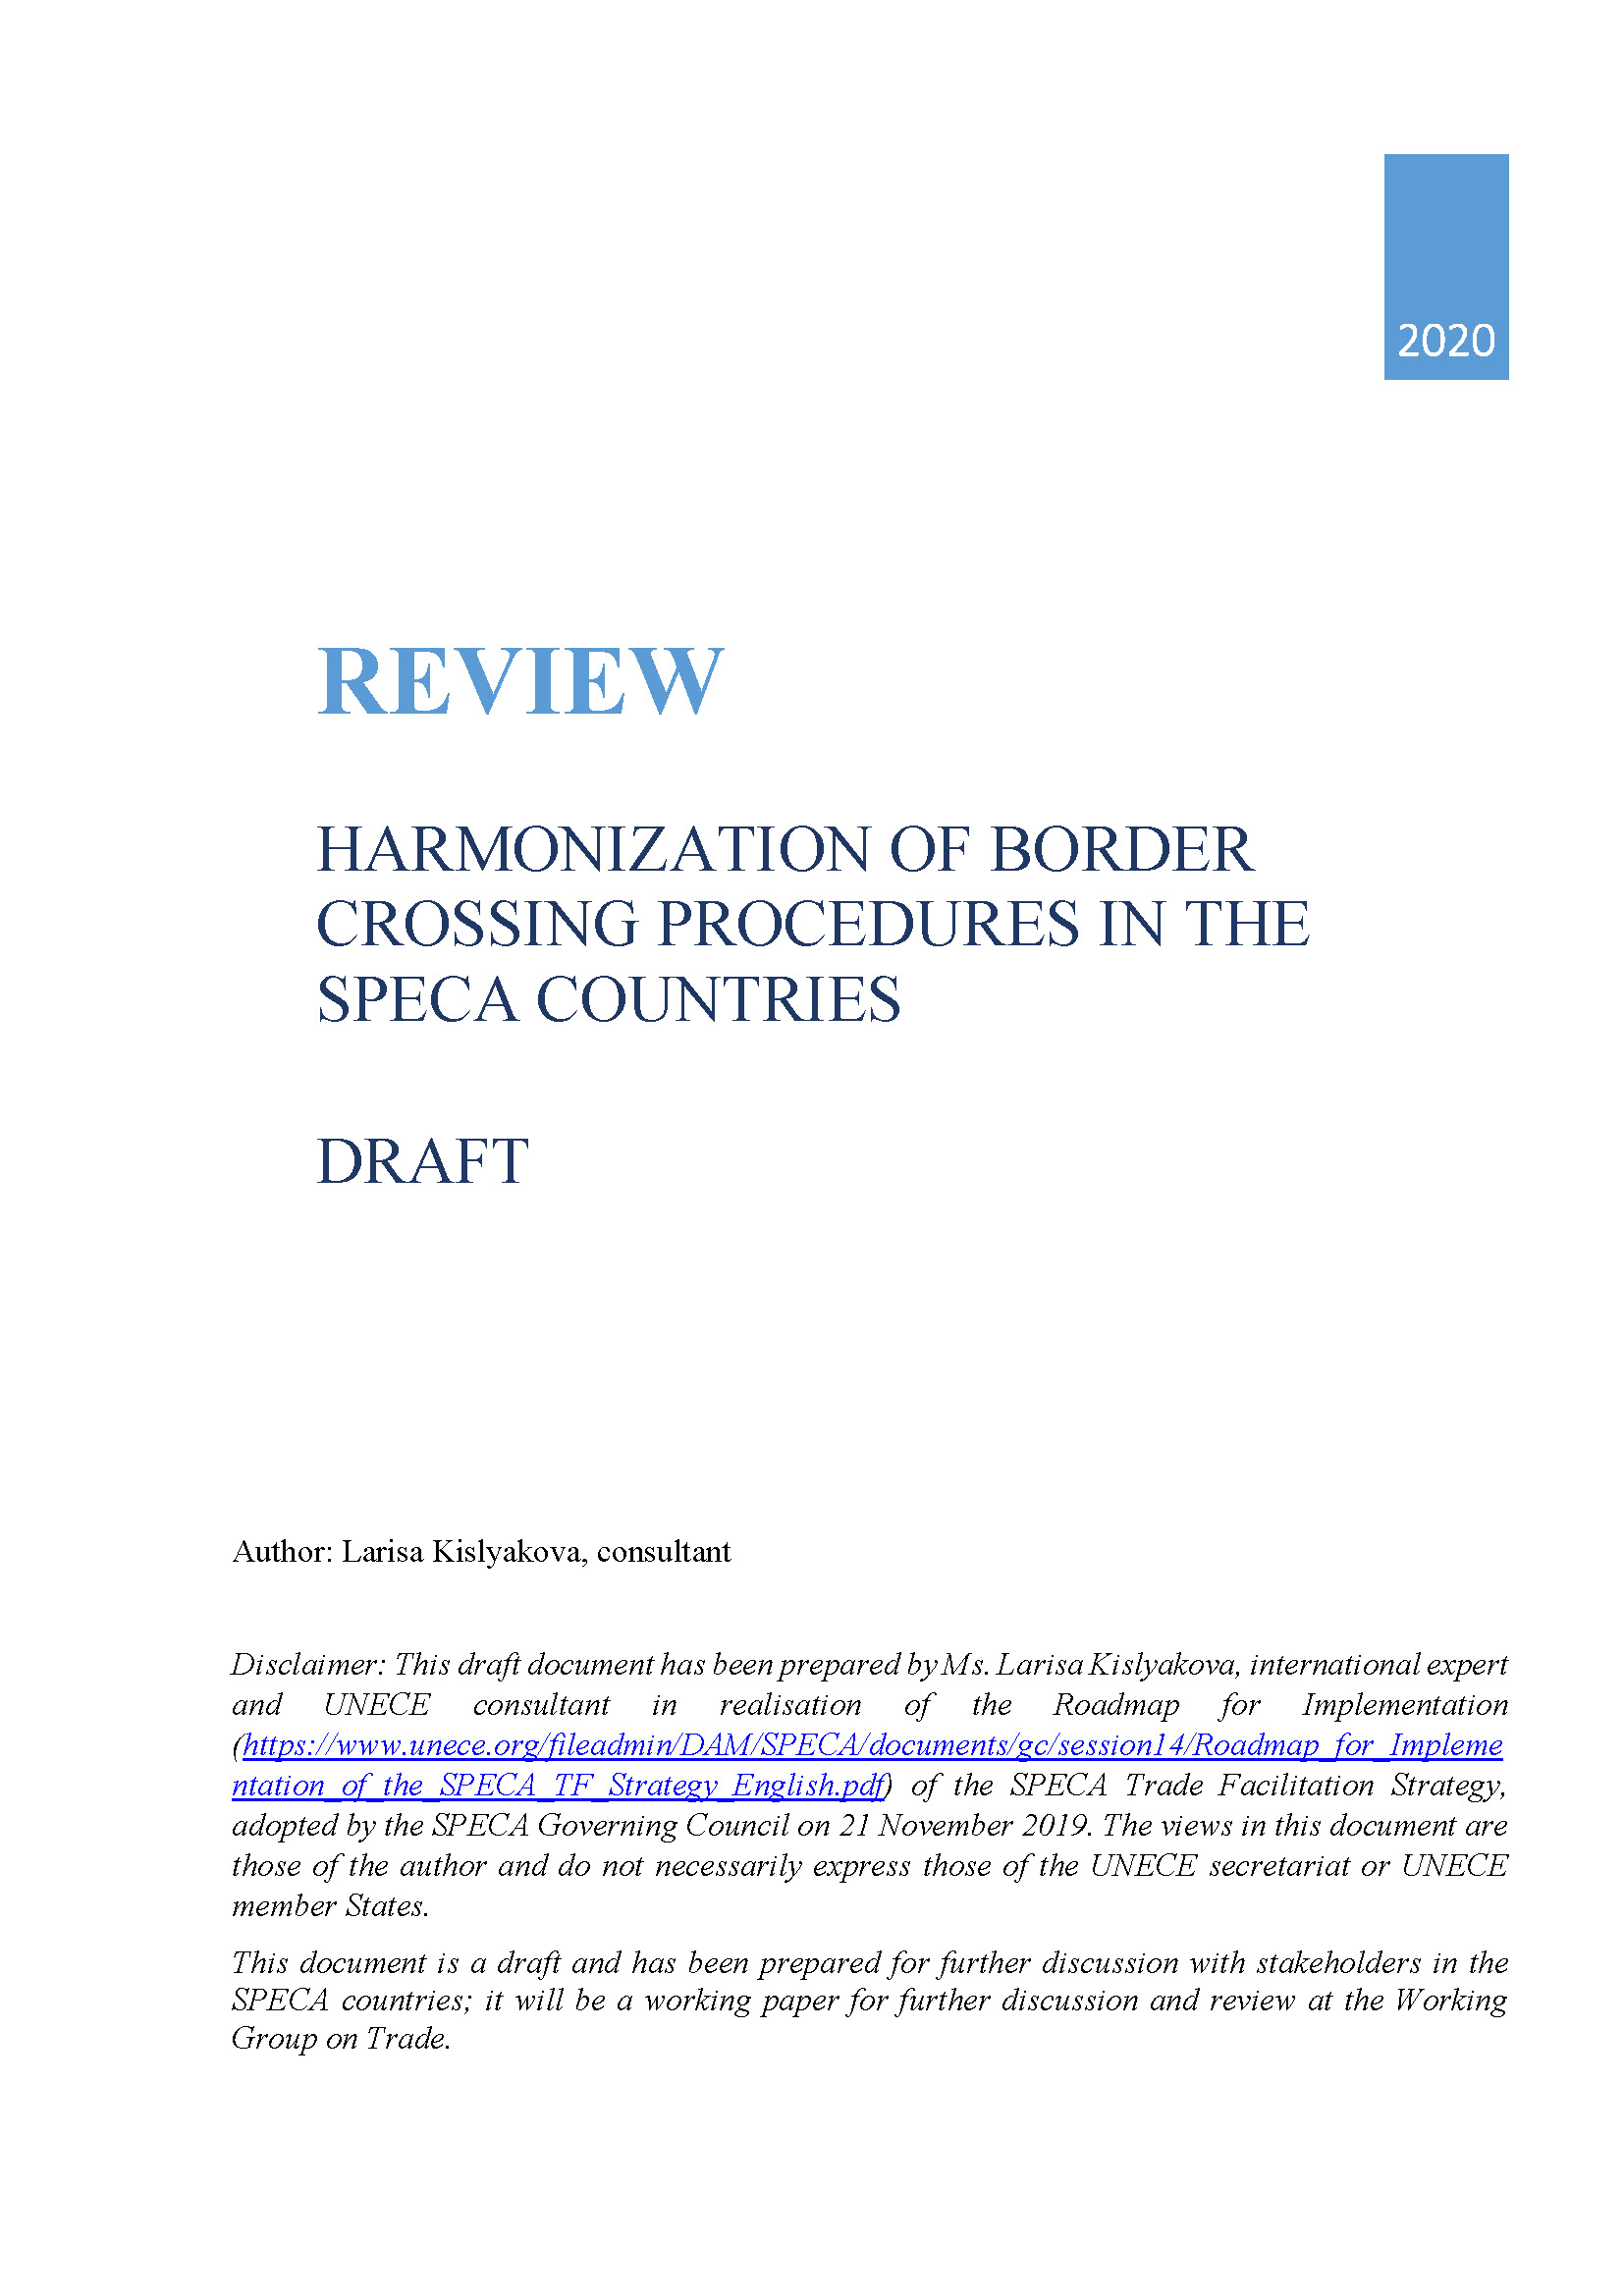 Review: Harmonization of border crossing procedures in SPECA Countries